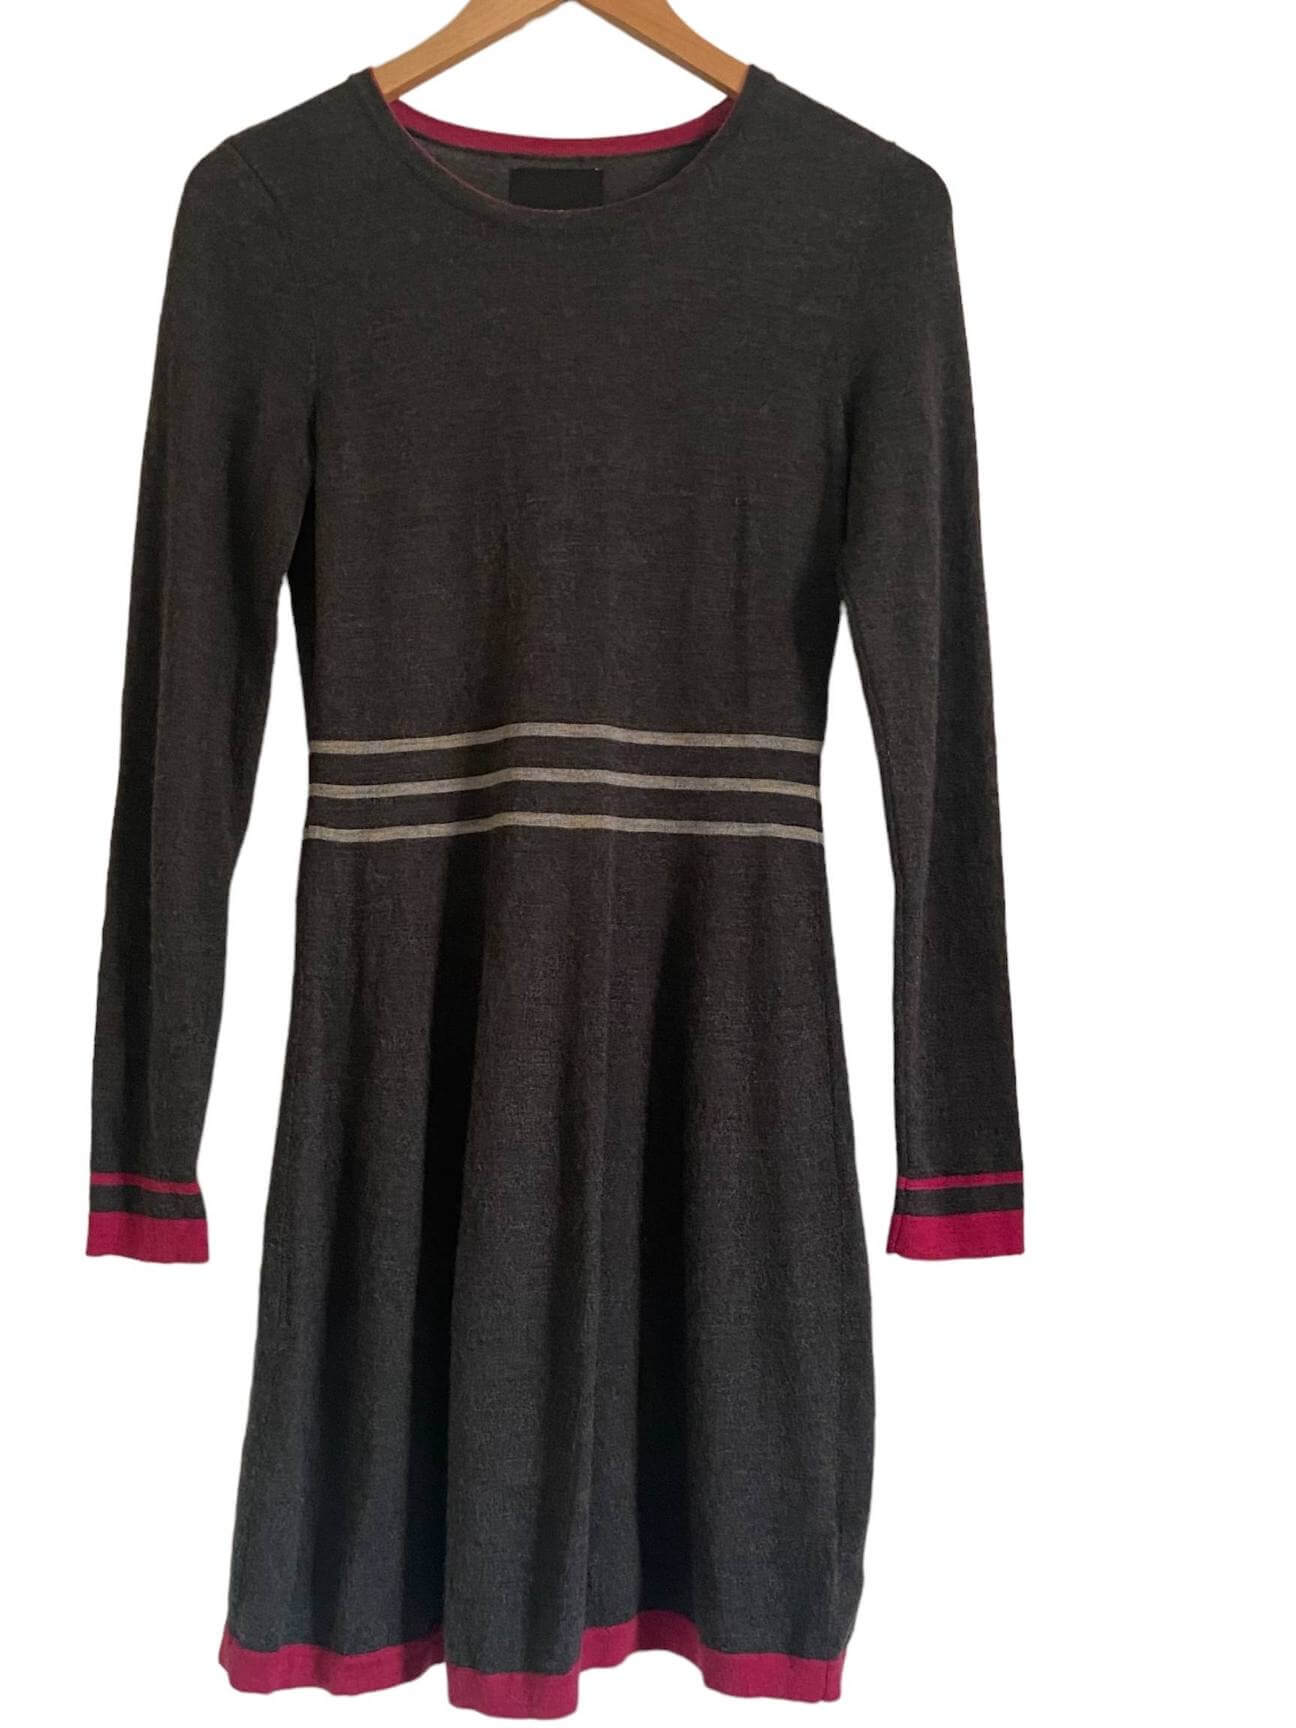 Dark Winter CYNTHIA ROWLEY gray banded wool sweater dress